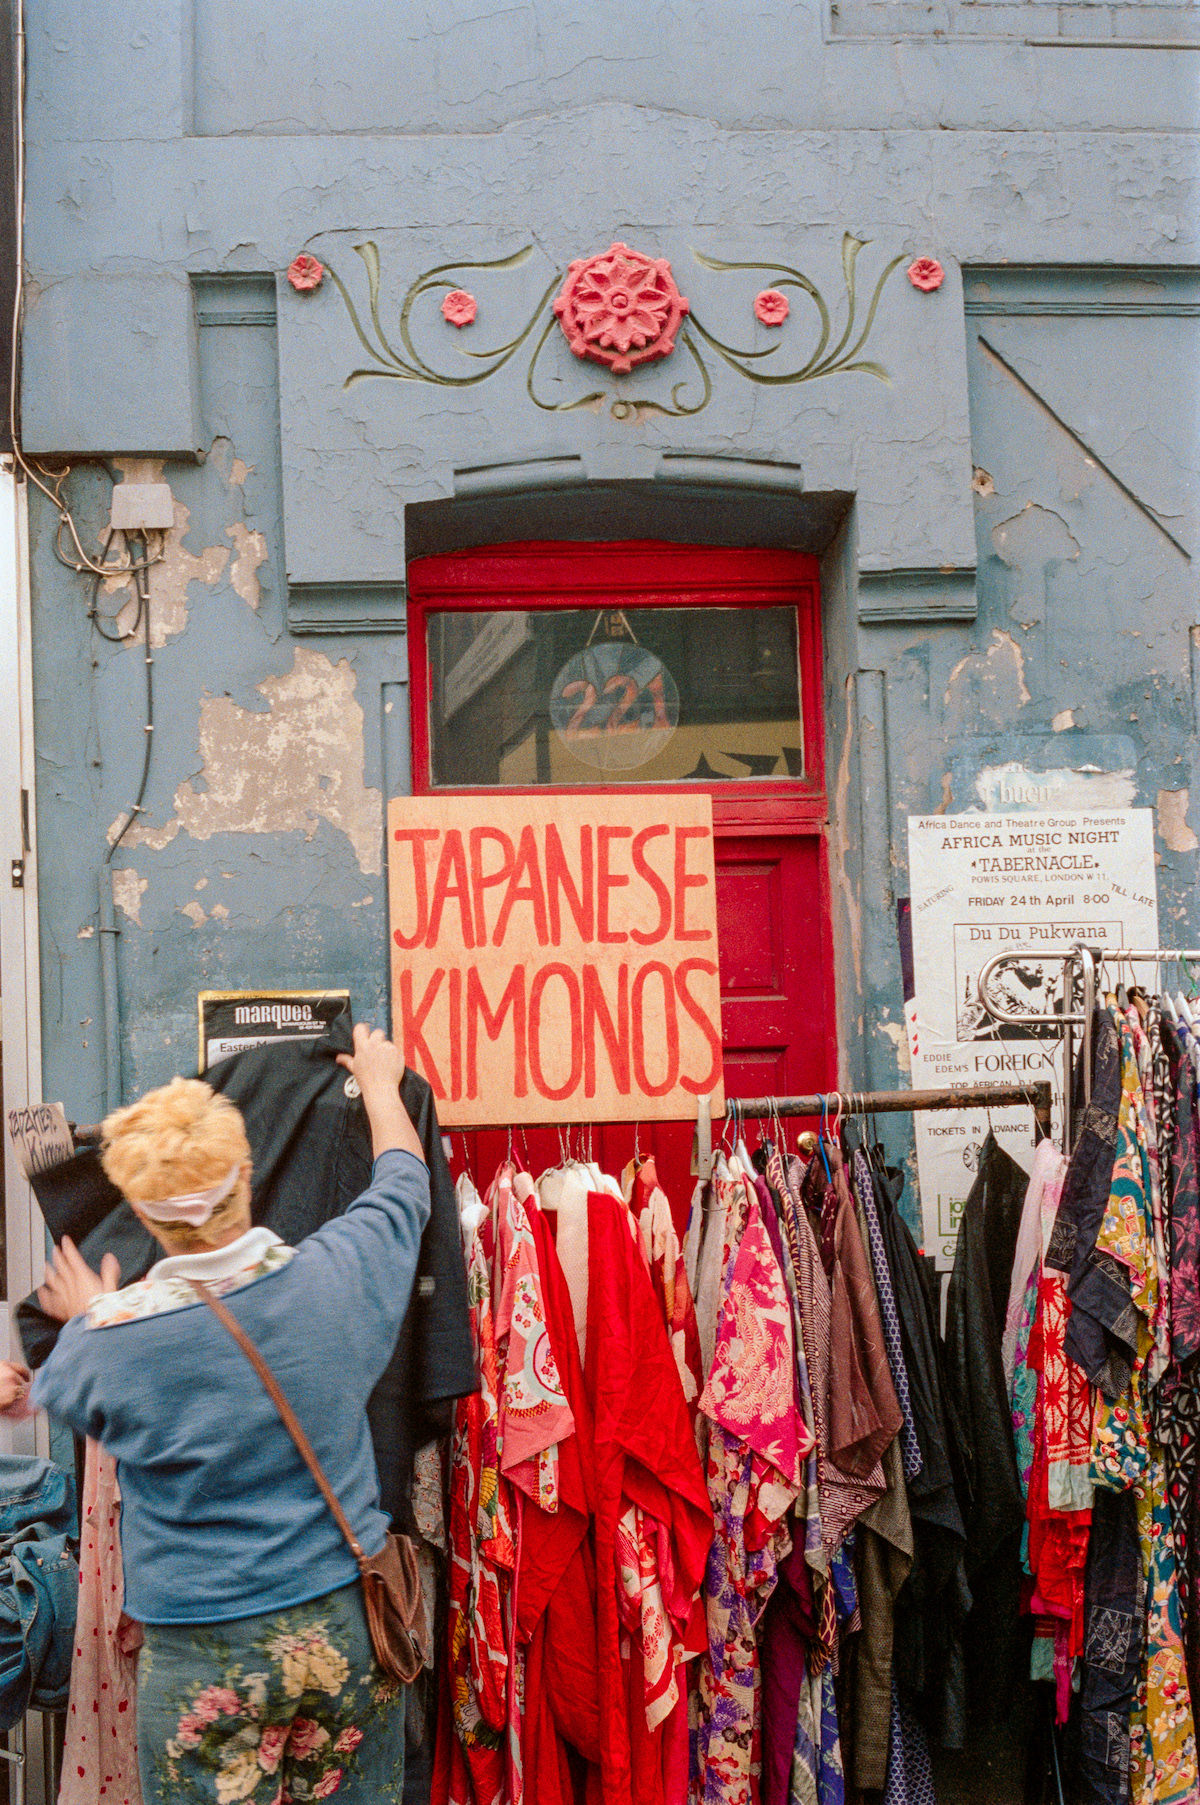 Japanese Kimonos on sale at 221, Portobello Rd, Notting Hill, Kensington & Chelsea, 1987